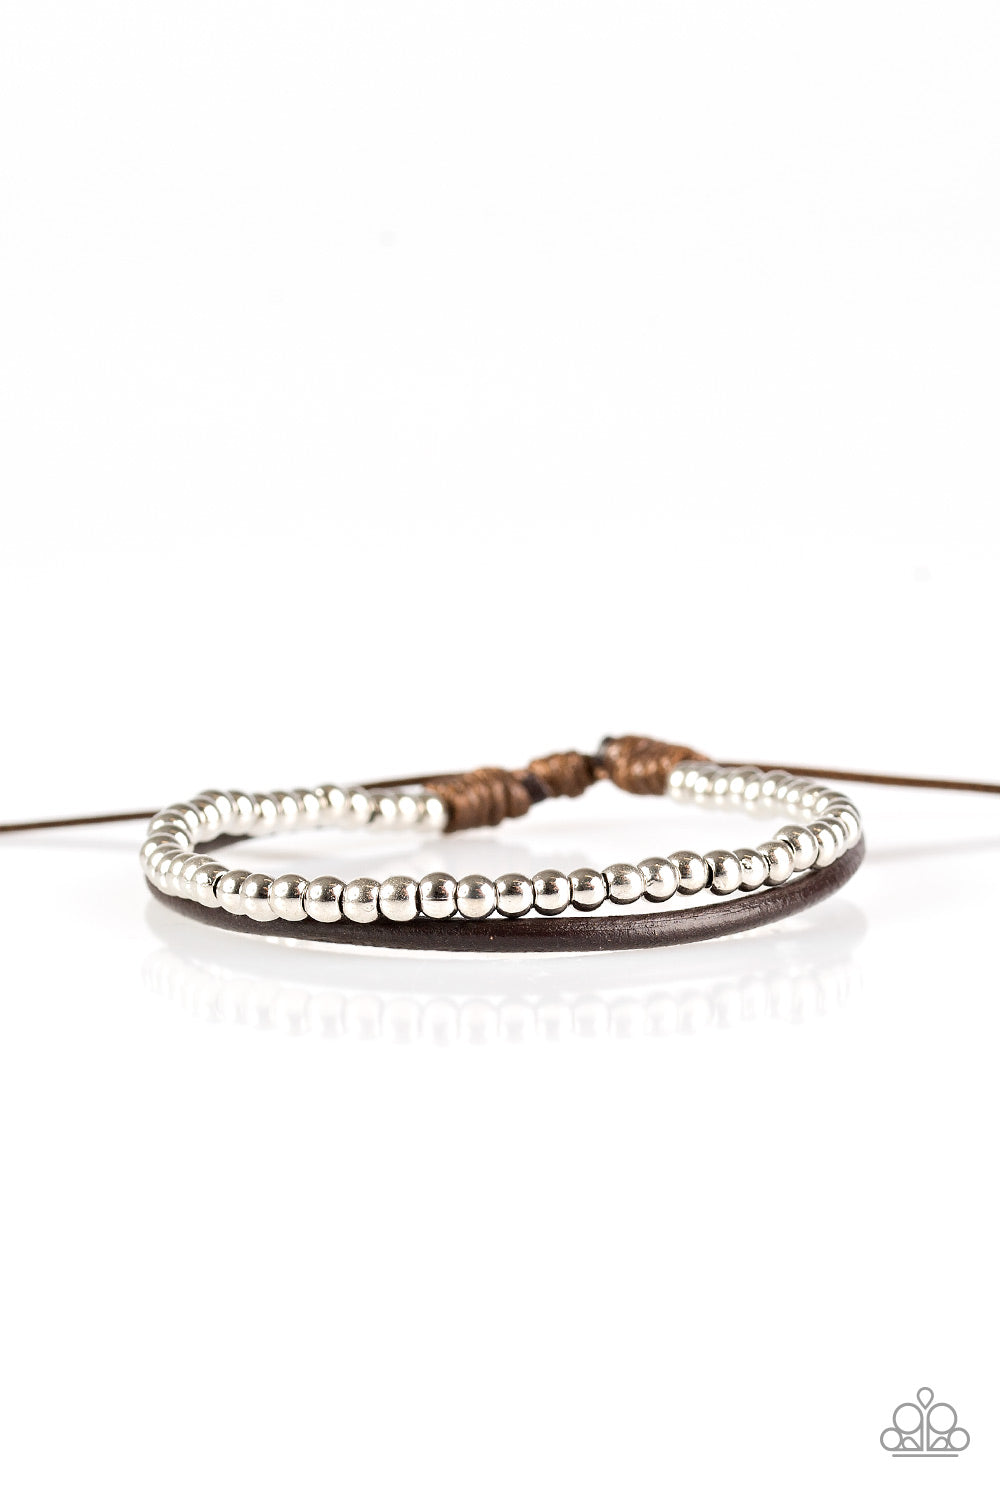 Paparazzi Mountain Mod - Brown Leather - Silver Beads - Sliding Knot Bracelet - $5 Jewelry With Ashley Swint